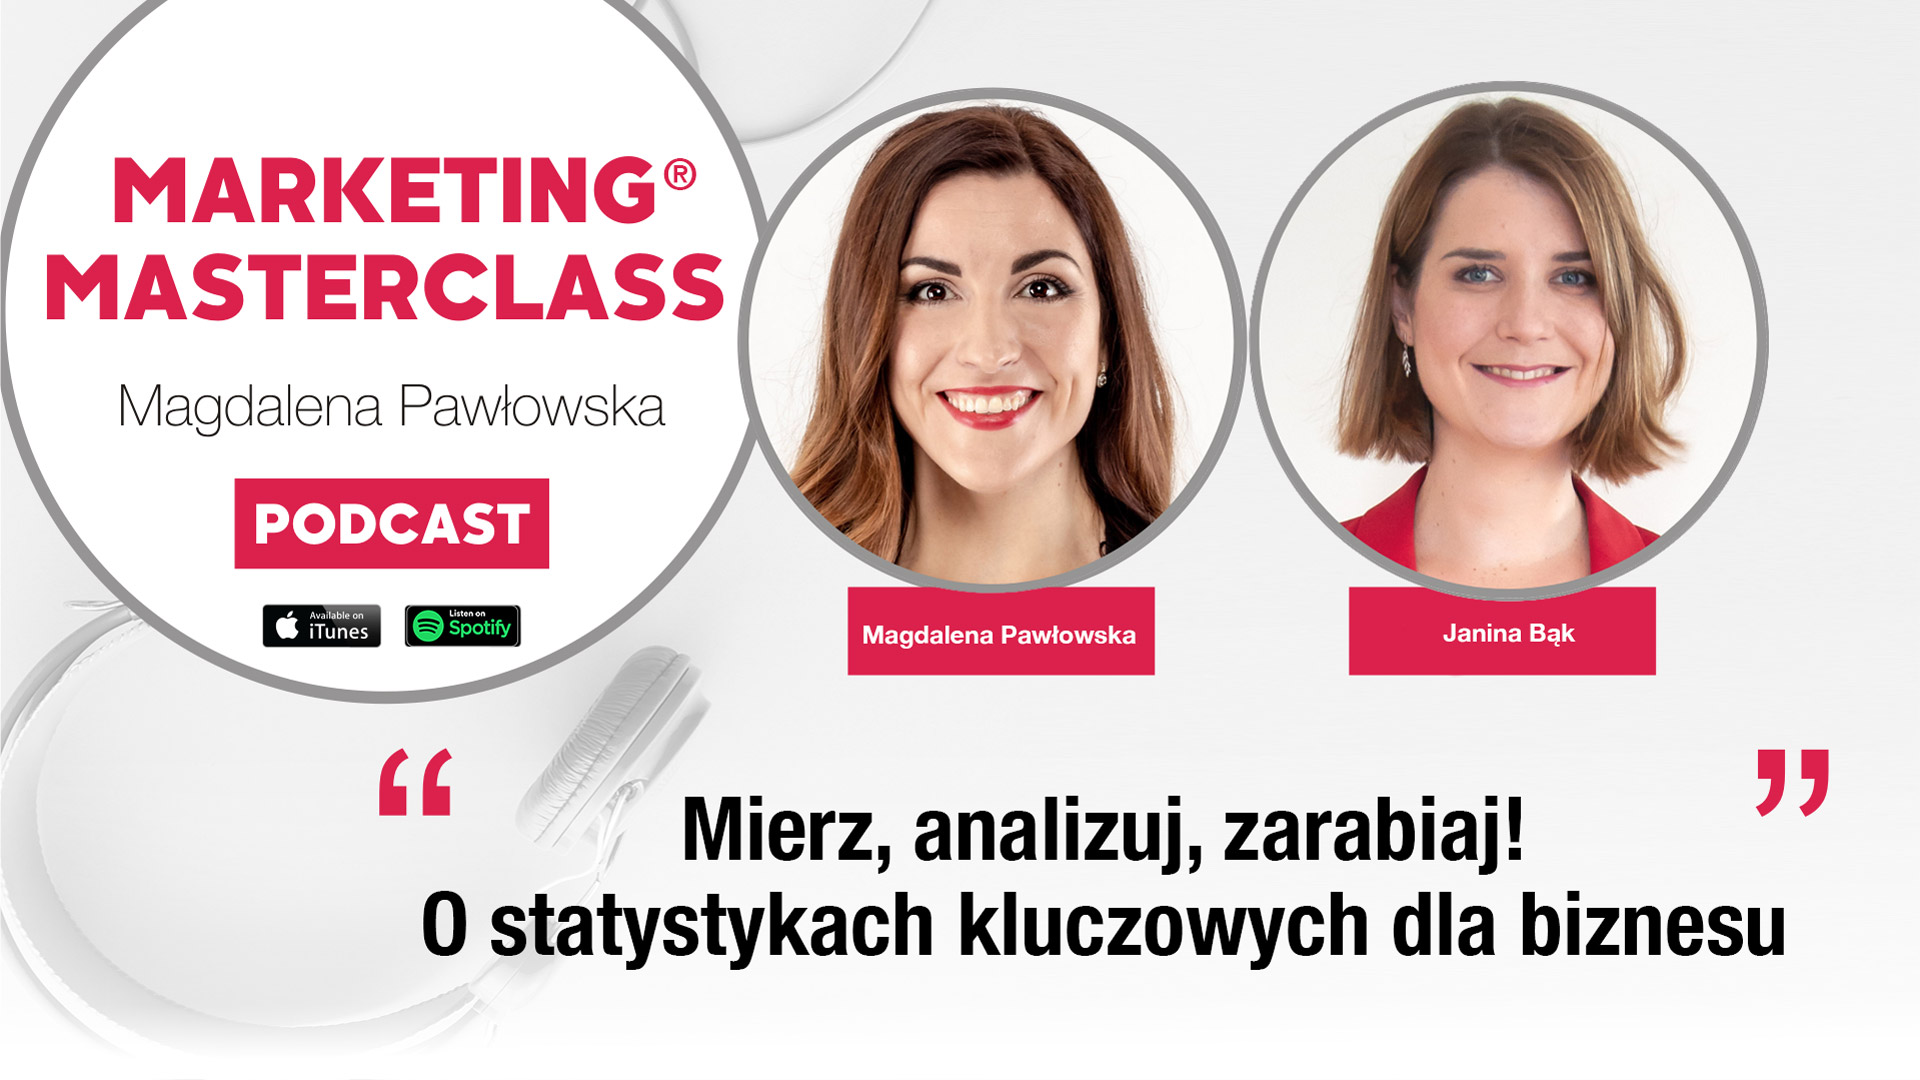 Analiza biznesu online podcast Janina Bąk